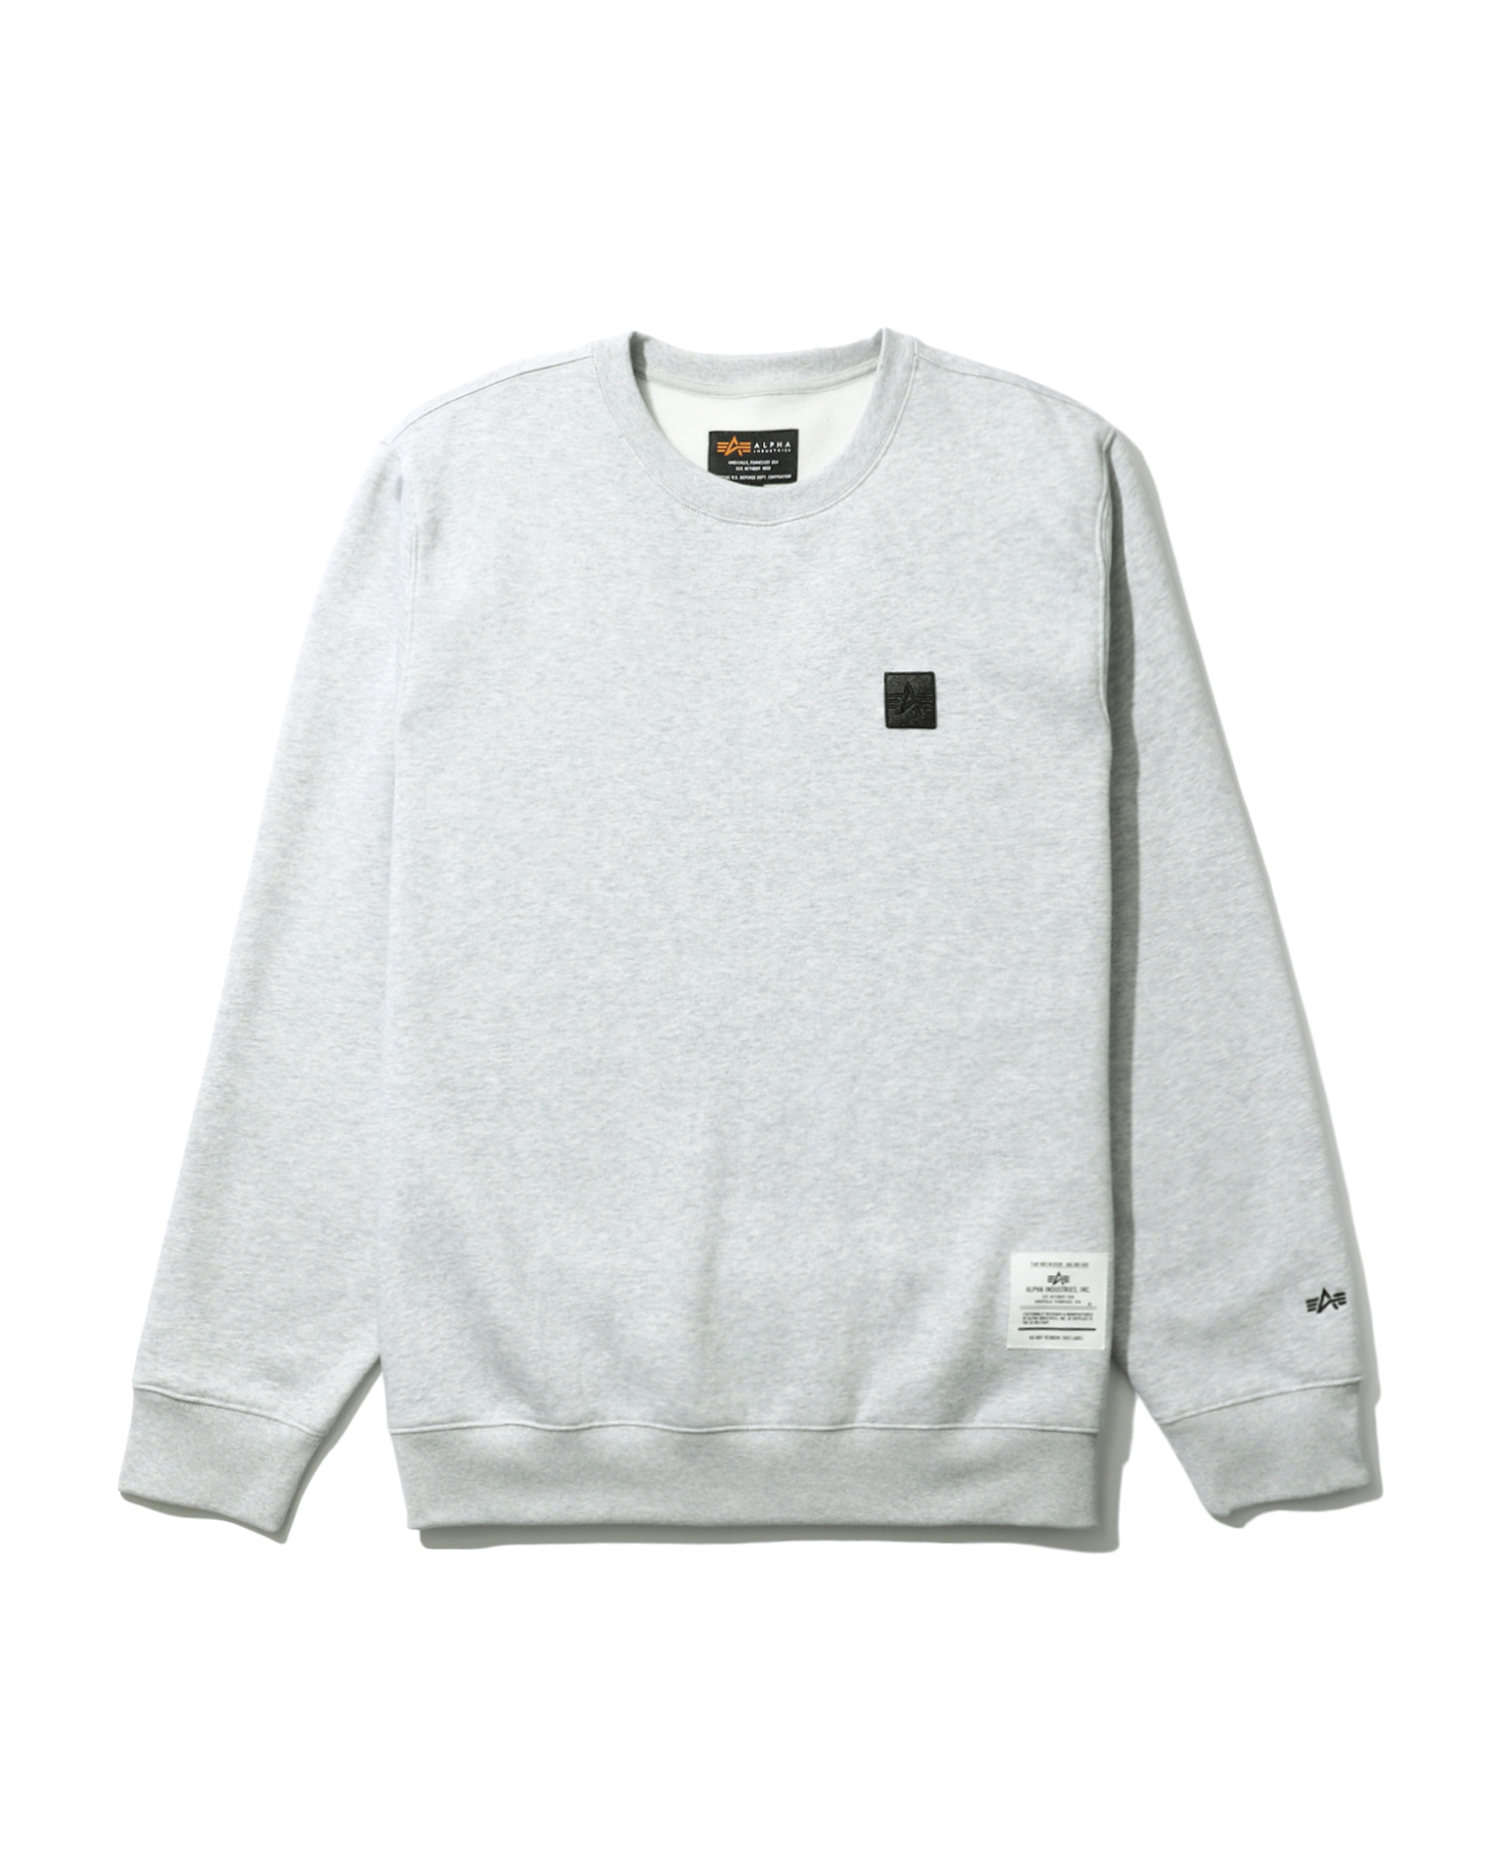 logo sweater